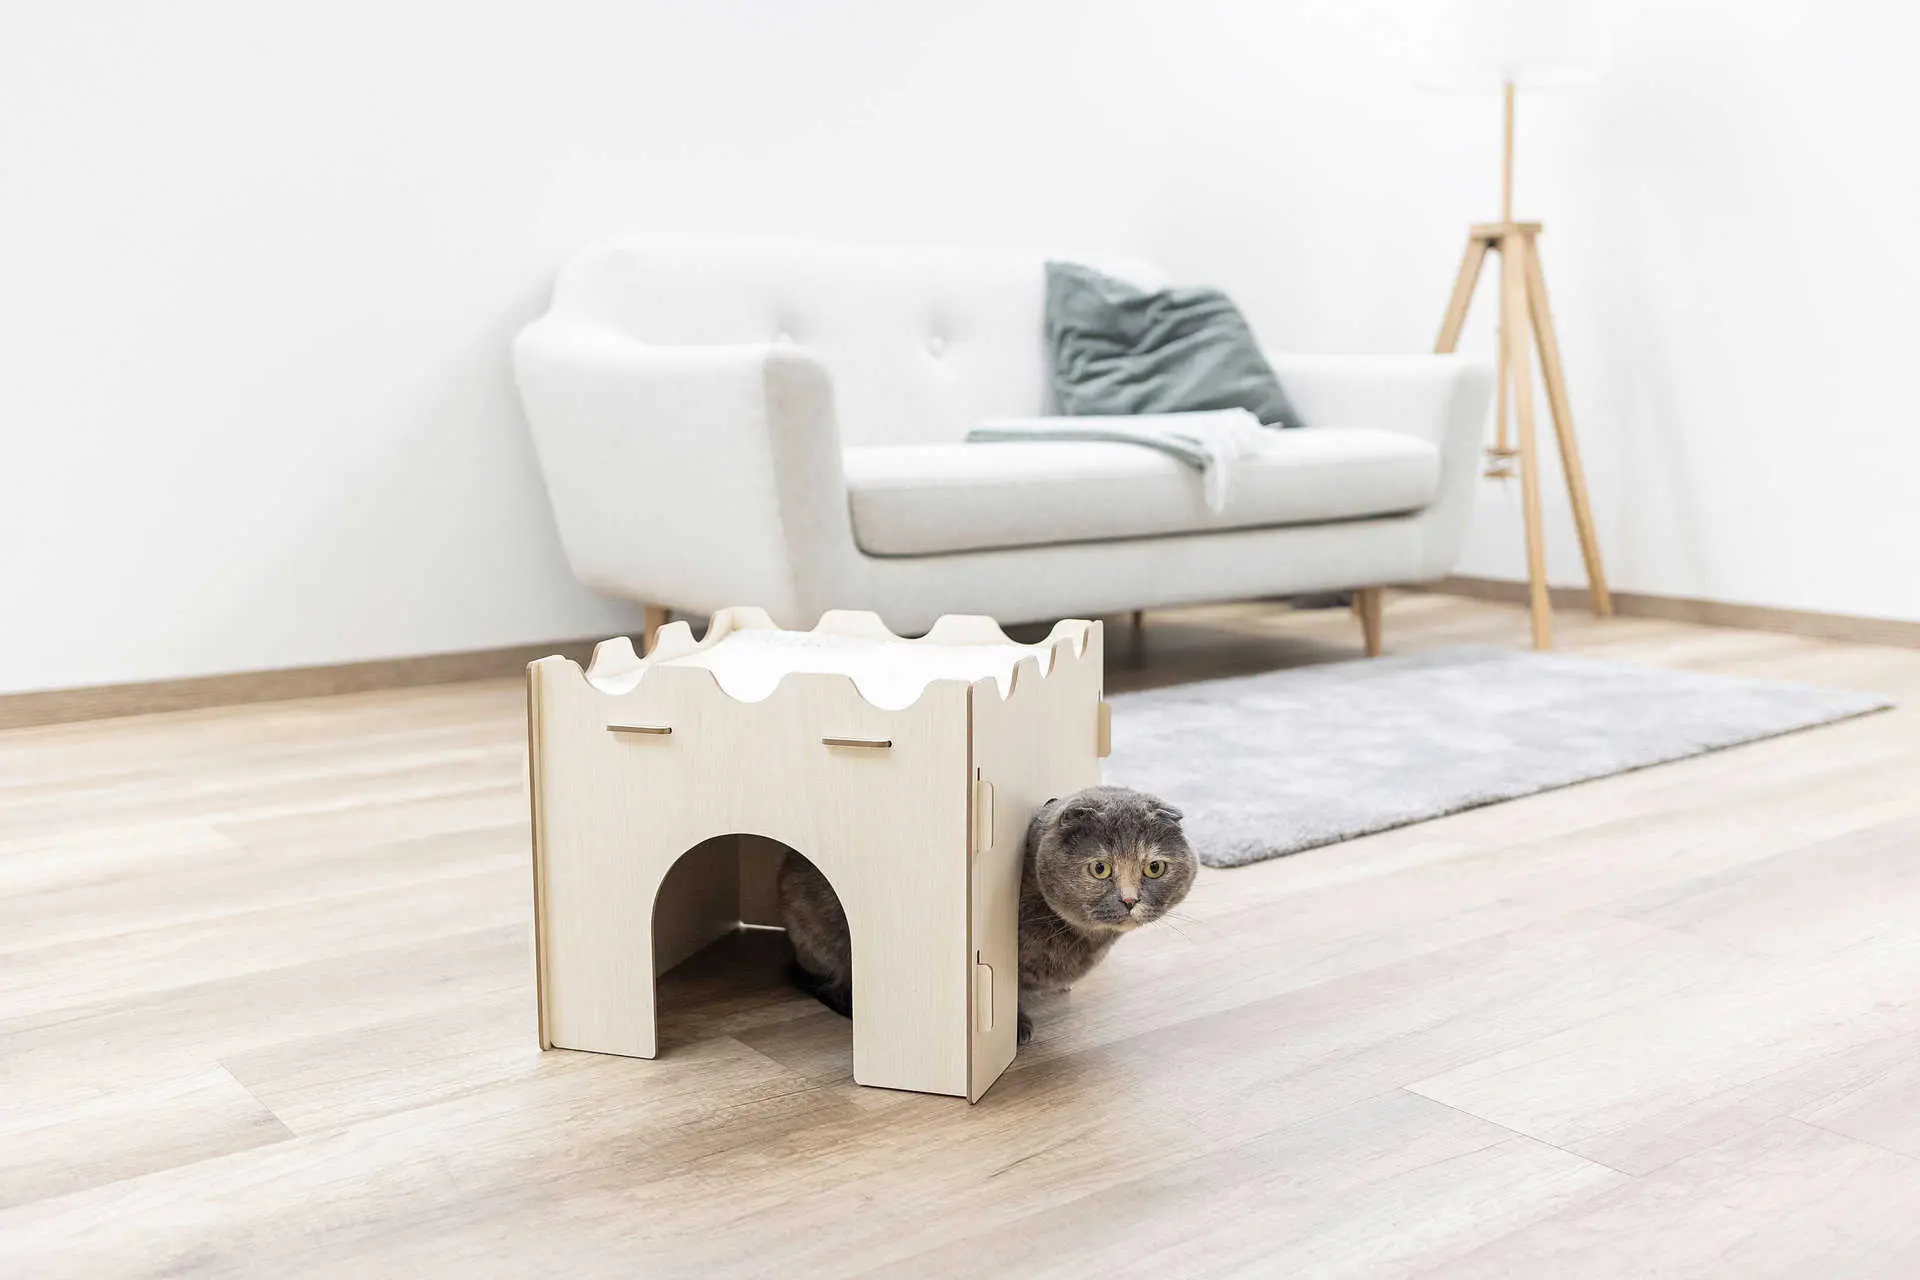 Cat Castle 37 x 37 x 30 cm with Cushion